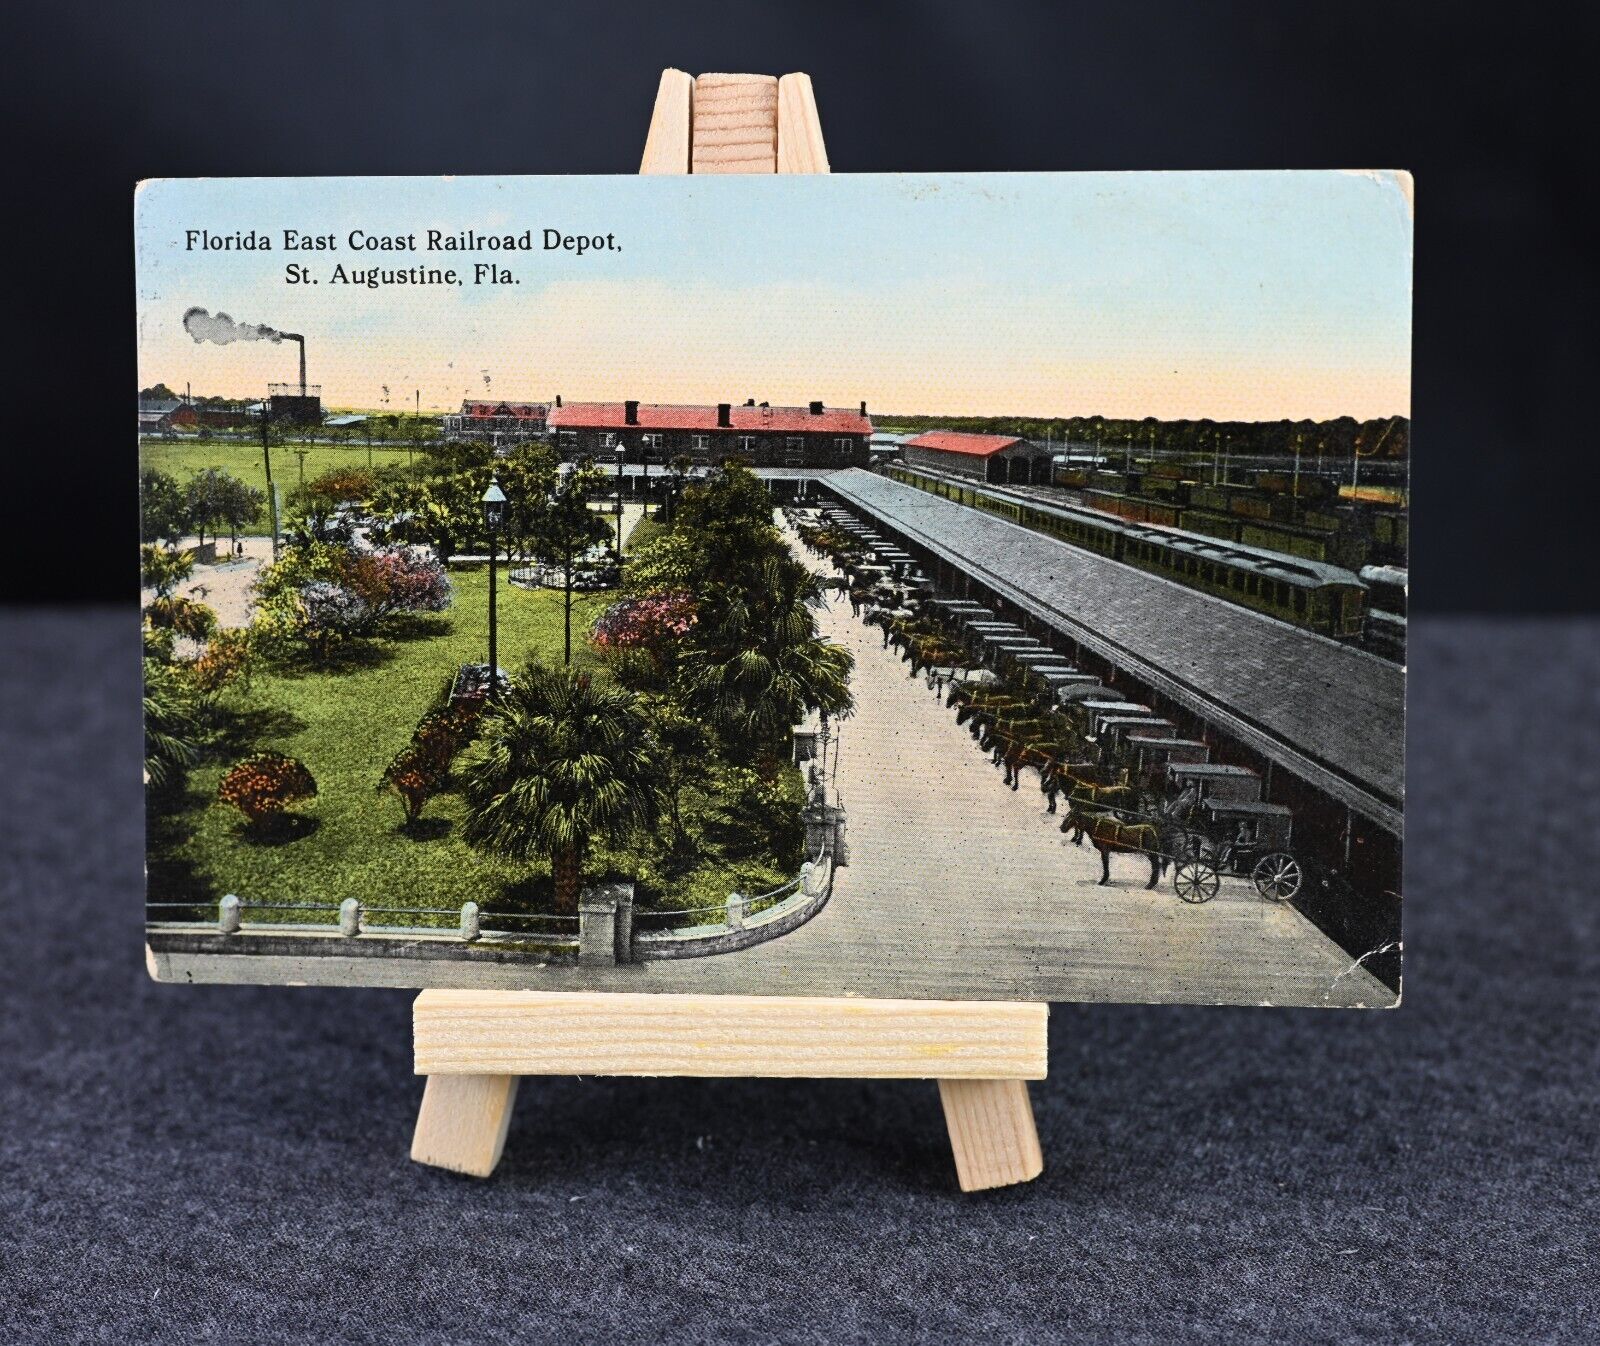 St Augustine, FL - Florida East Coast Railroad Depot / Station Postcard